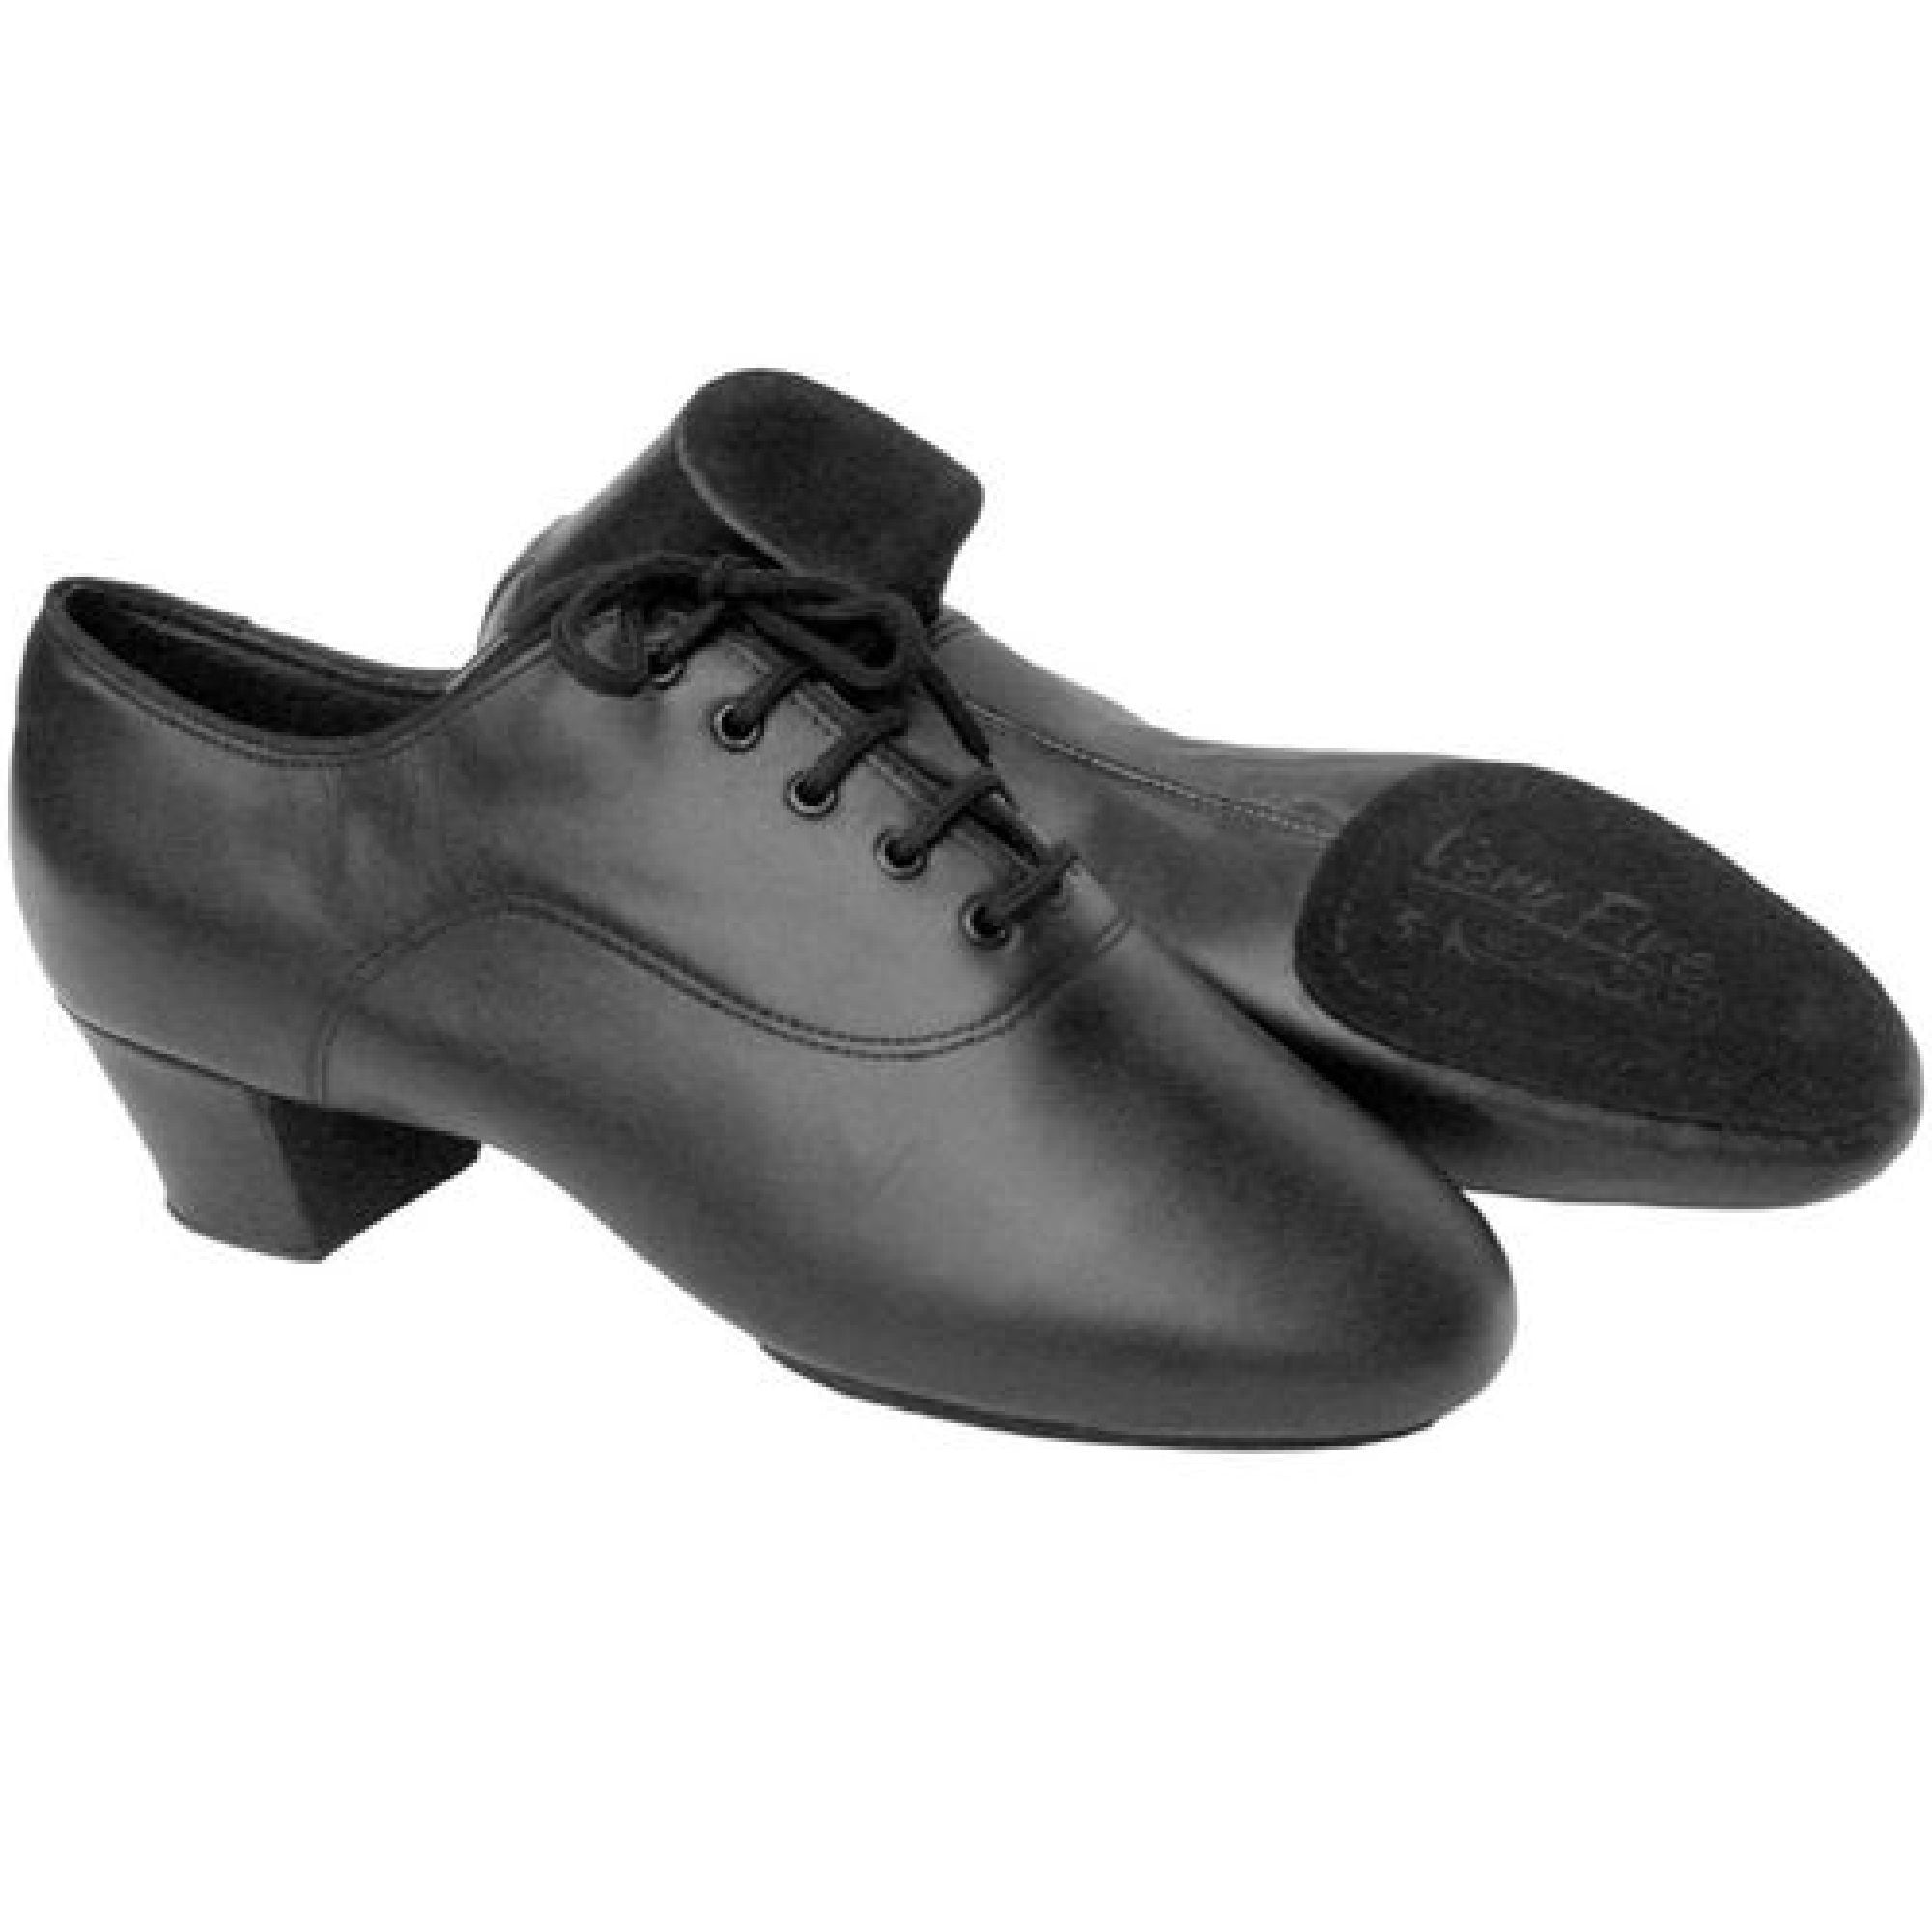 veryfine dance shoes